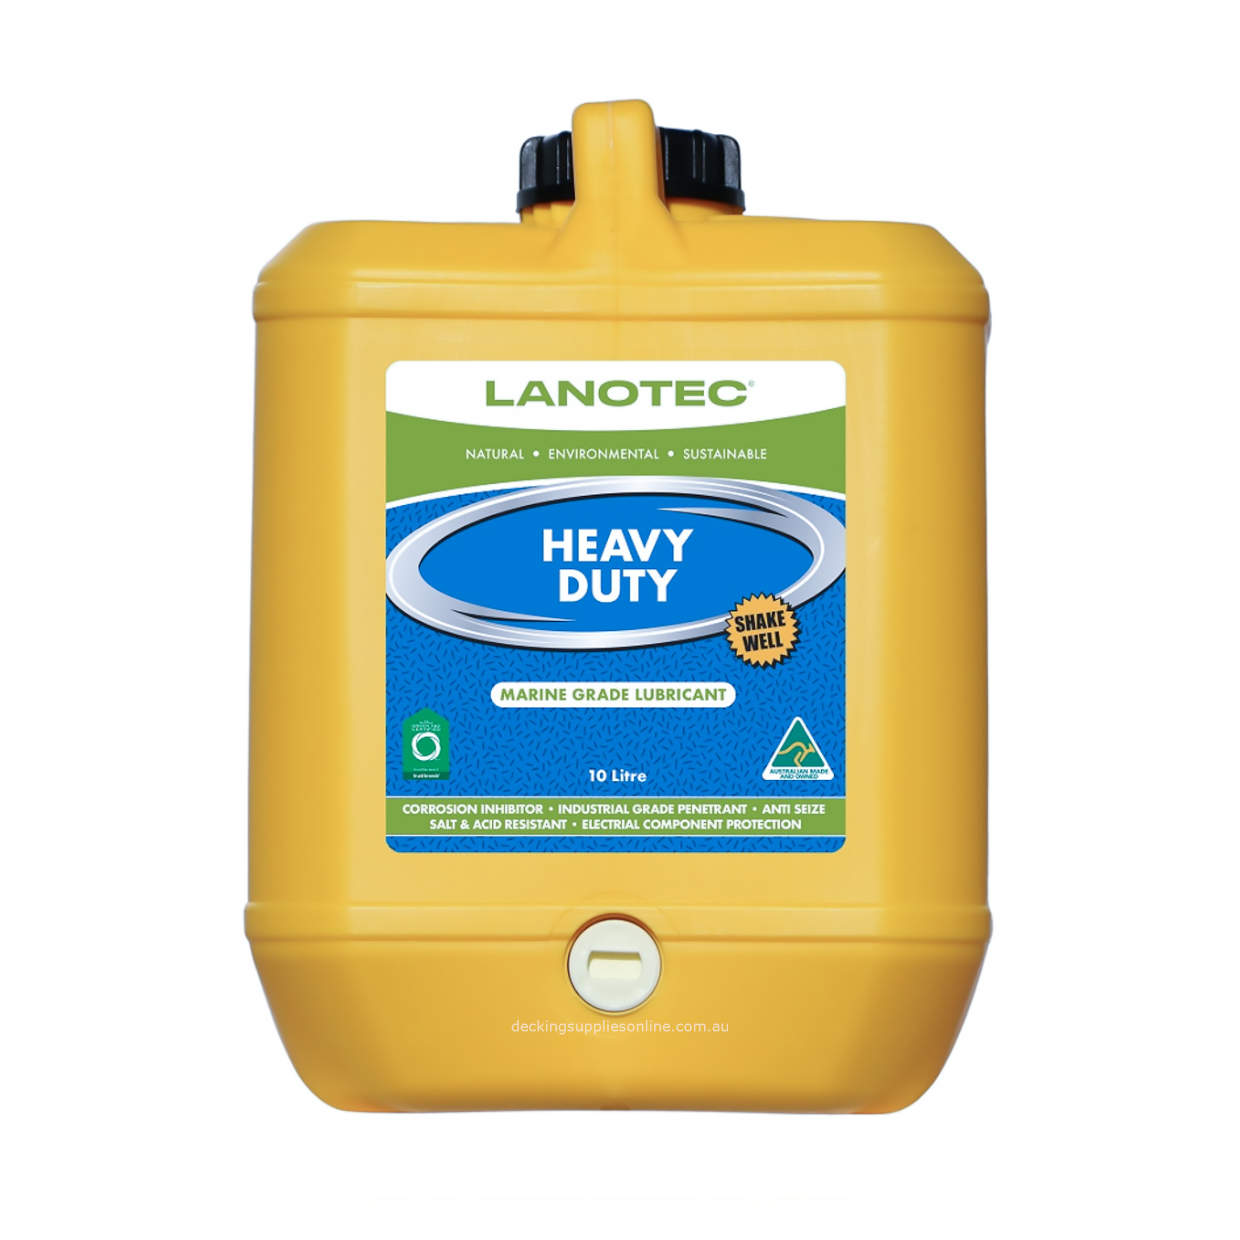 Lanotec_Heavy_Duty_10_litre_Decking_Supplies_Online